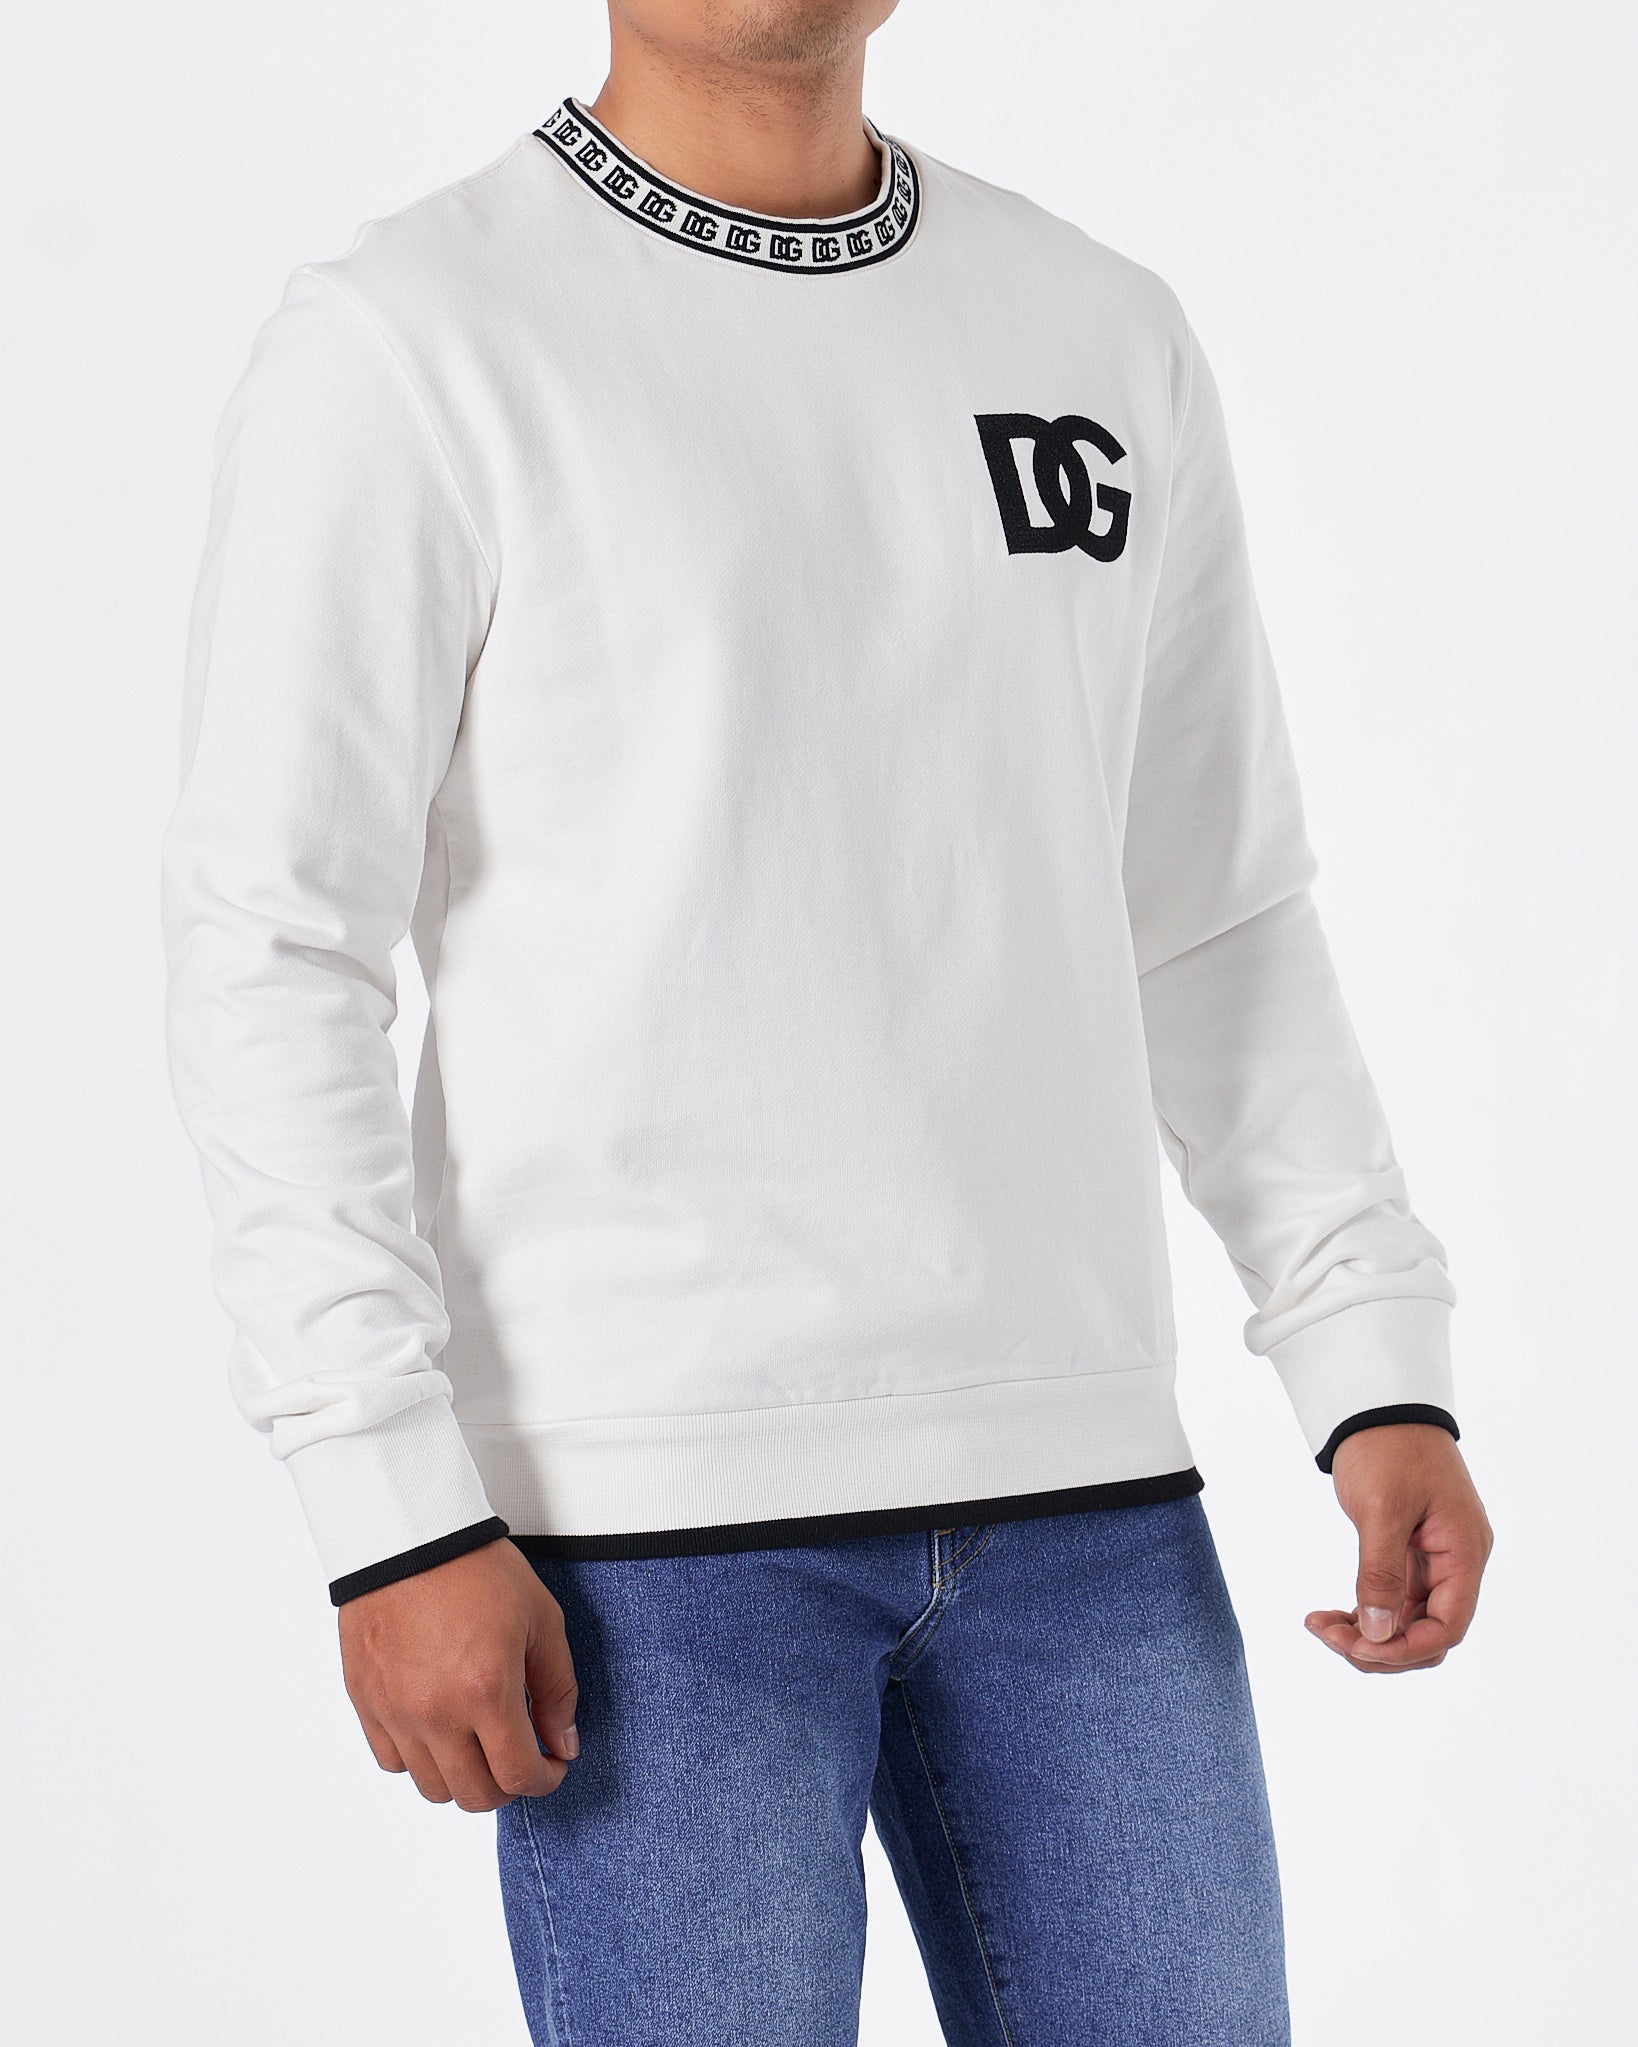 DG Logo Embroidered Men White Sweater 84.90